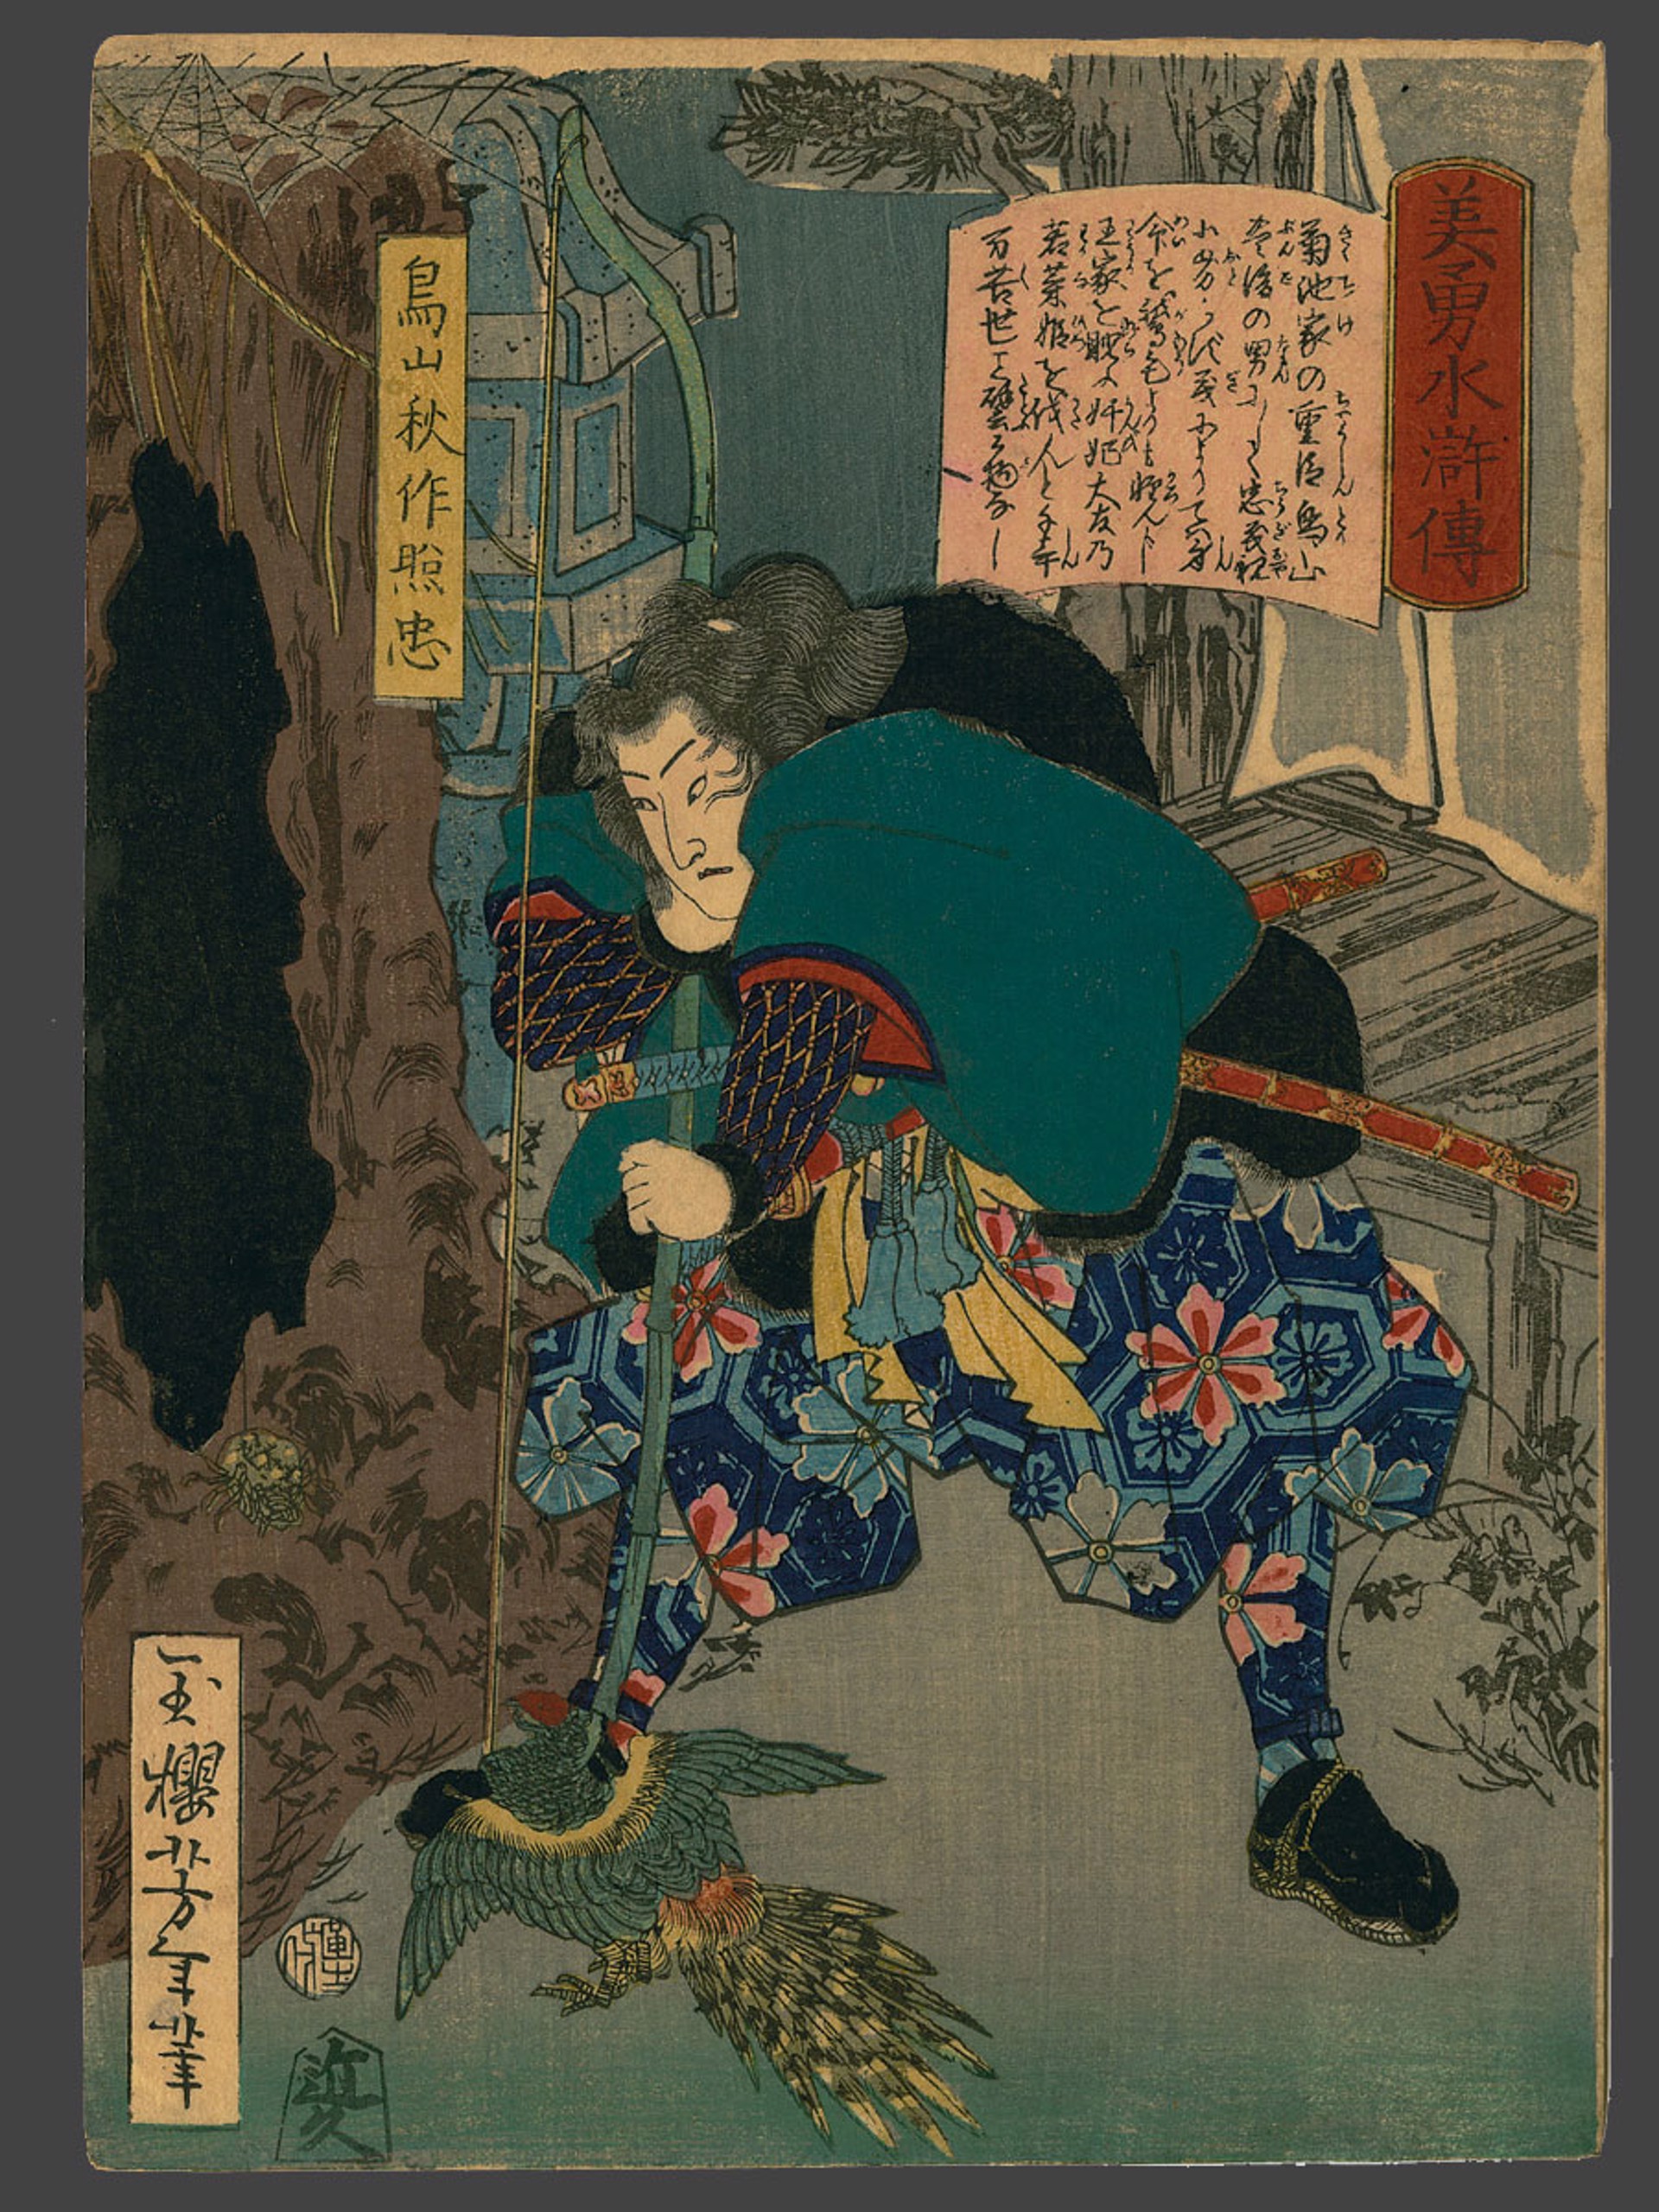 #30, Toriyama Shusaku Torutada Capturing a Pheasant with his Bow Biyu Suikoden (Beauty and Valor in Tales of the Water Margin) by Yoshitoshi